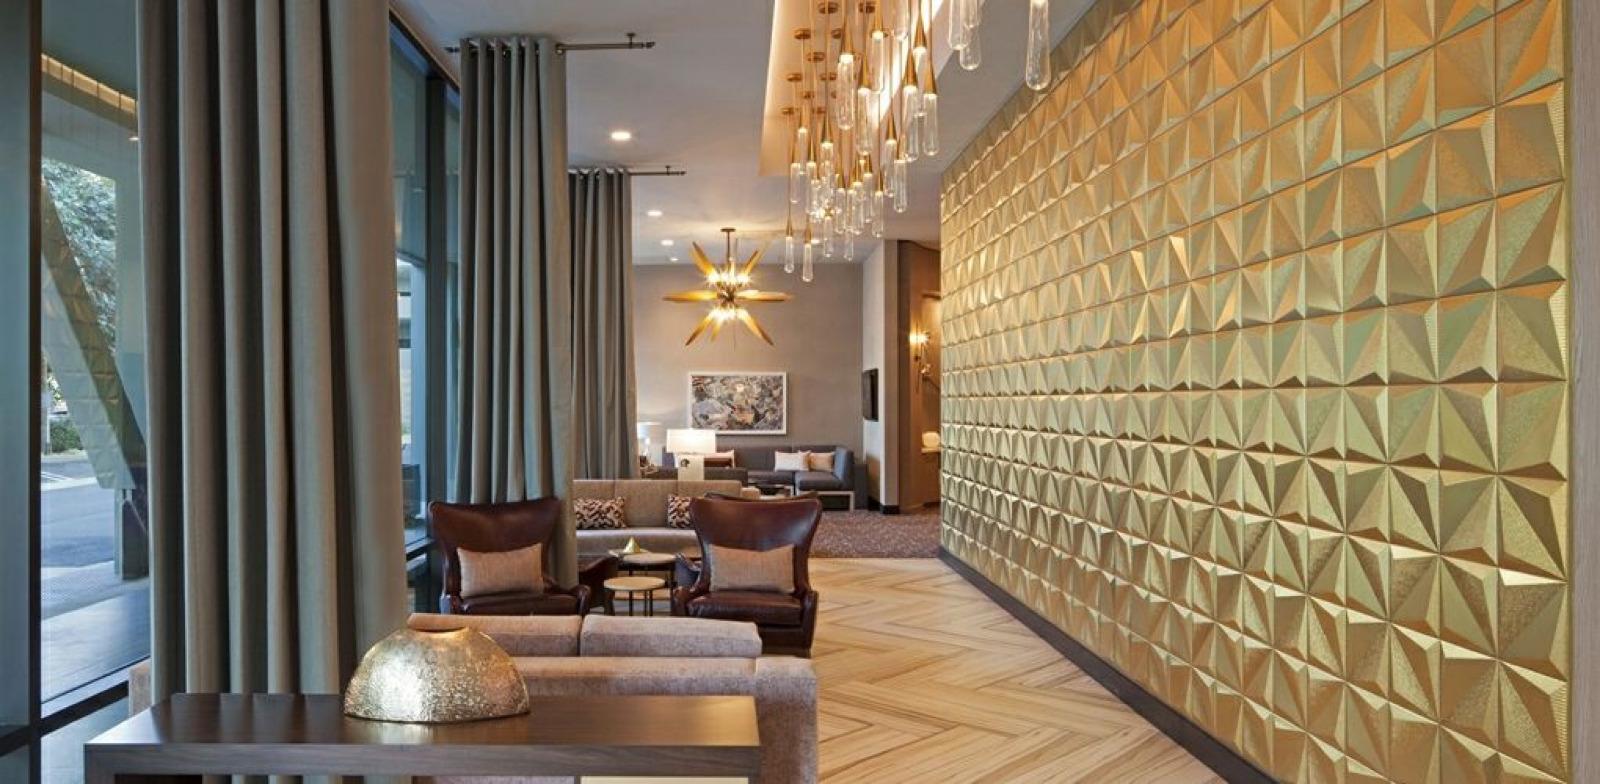 P-00108-HOTELES-Hotel origami gold-2500x